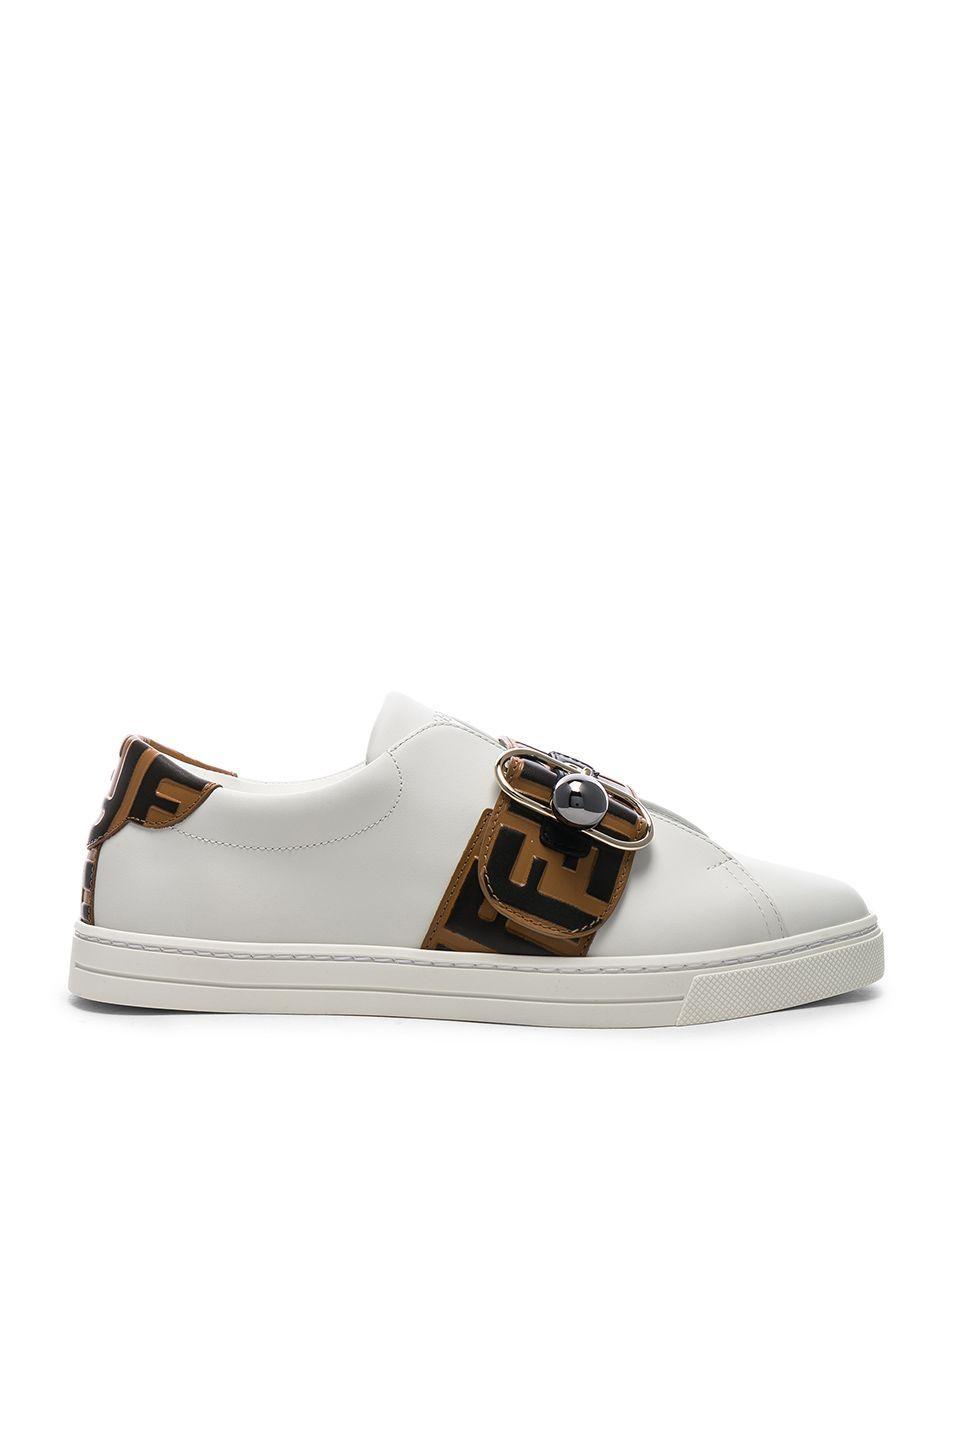 Expensive Shoe Logo - Fendi Logo Print Buckle Strap Sneakers in White, Black & Brown ...